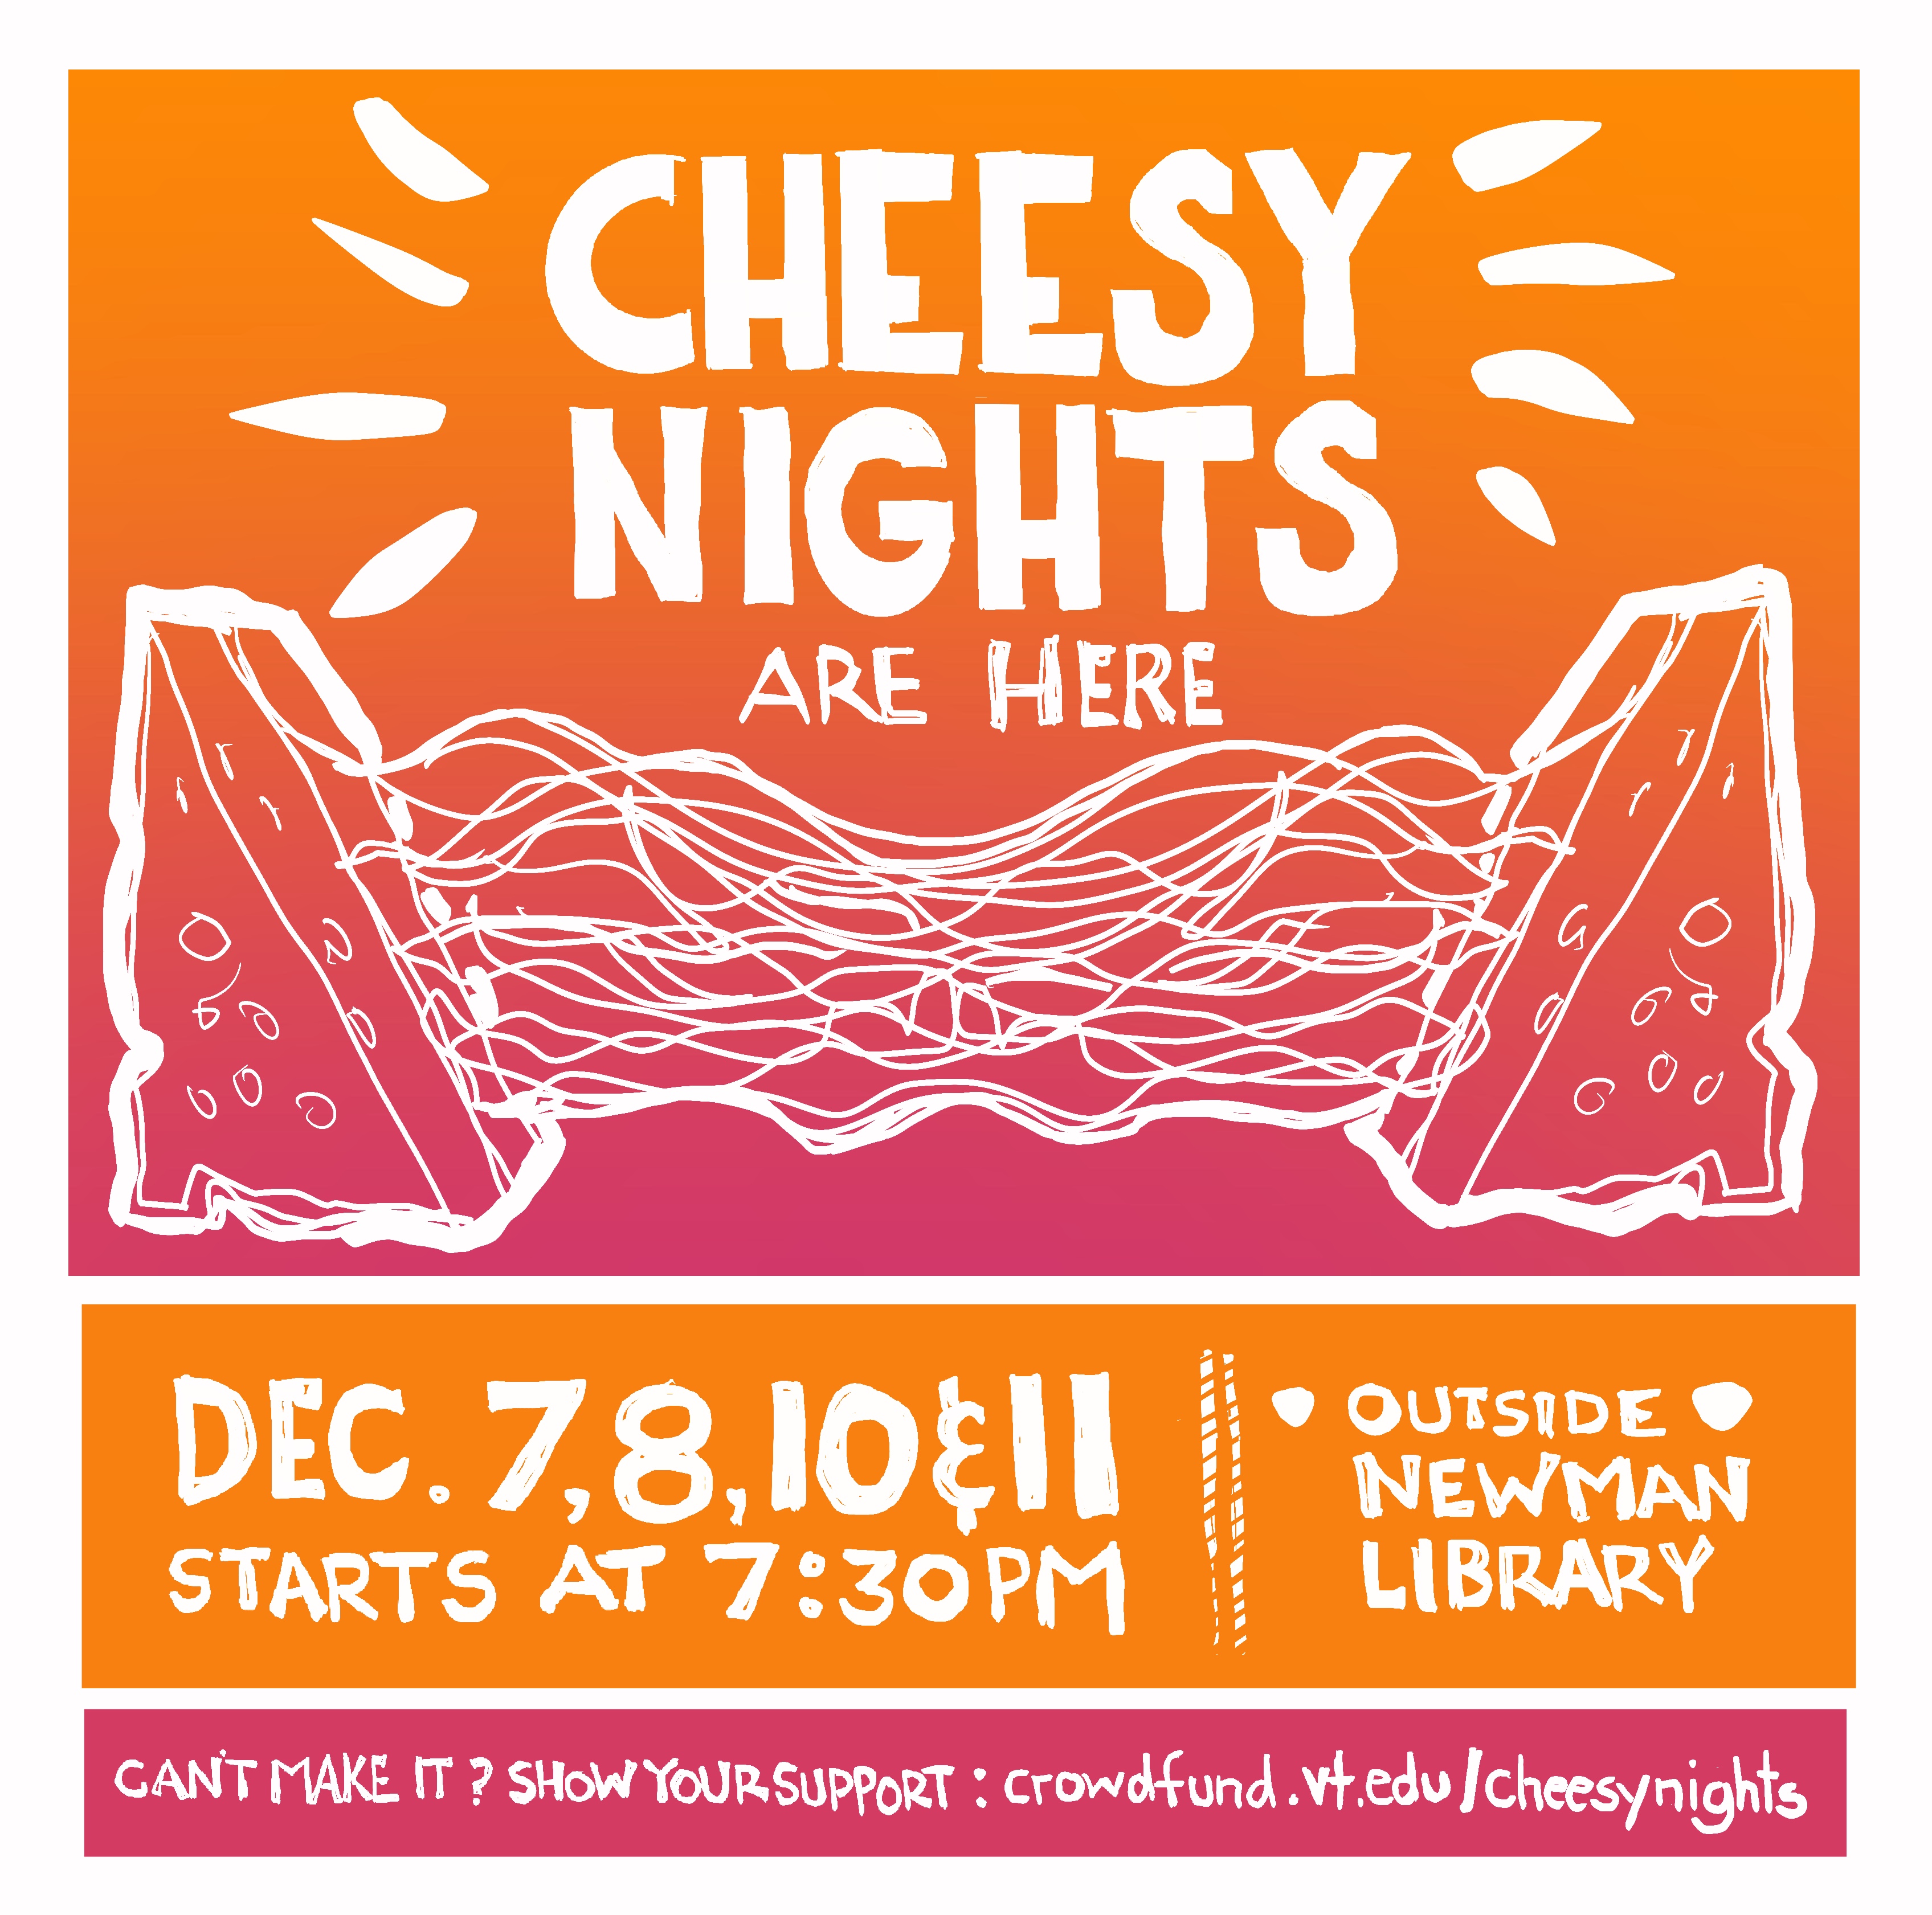 Digital sketch promoting cheesy nights at newman library at 7:30pm during exams